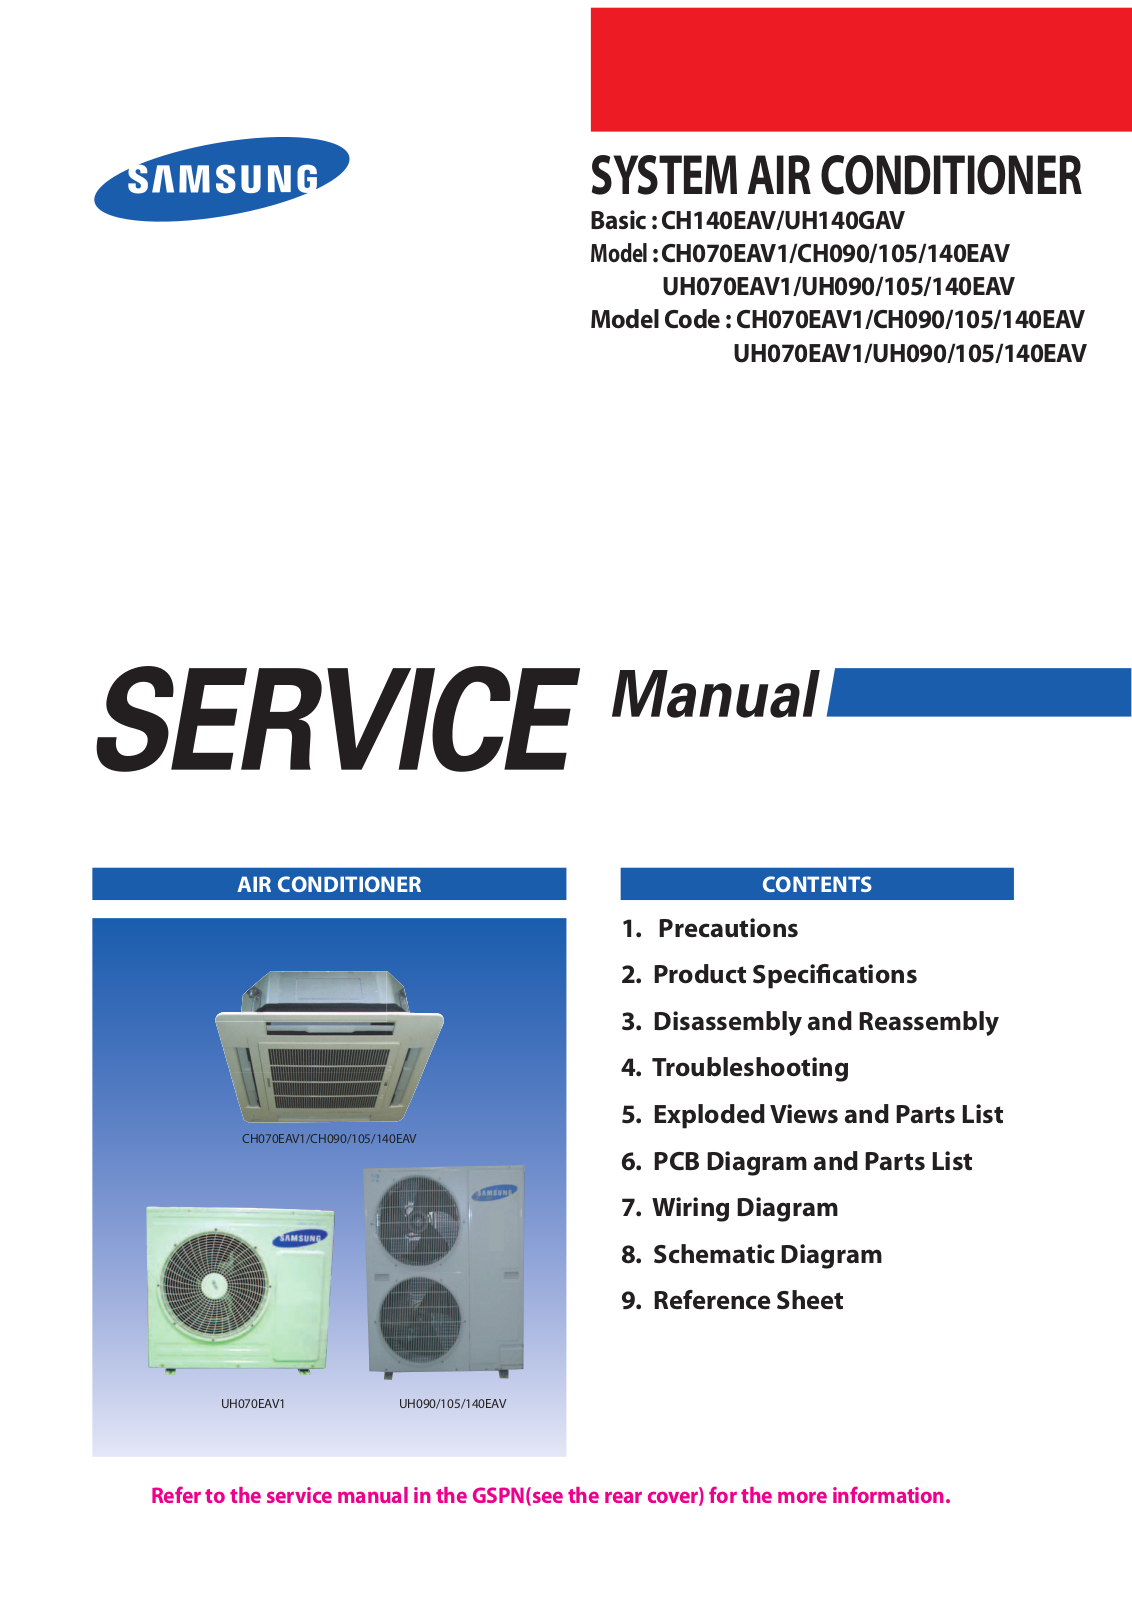 Samsung CH070, CH090, CH105, CH140 Service Manual